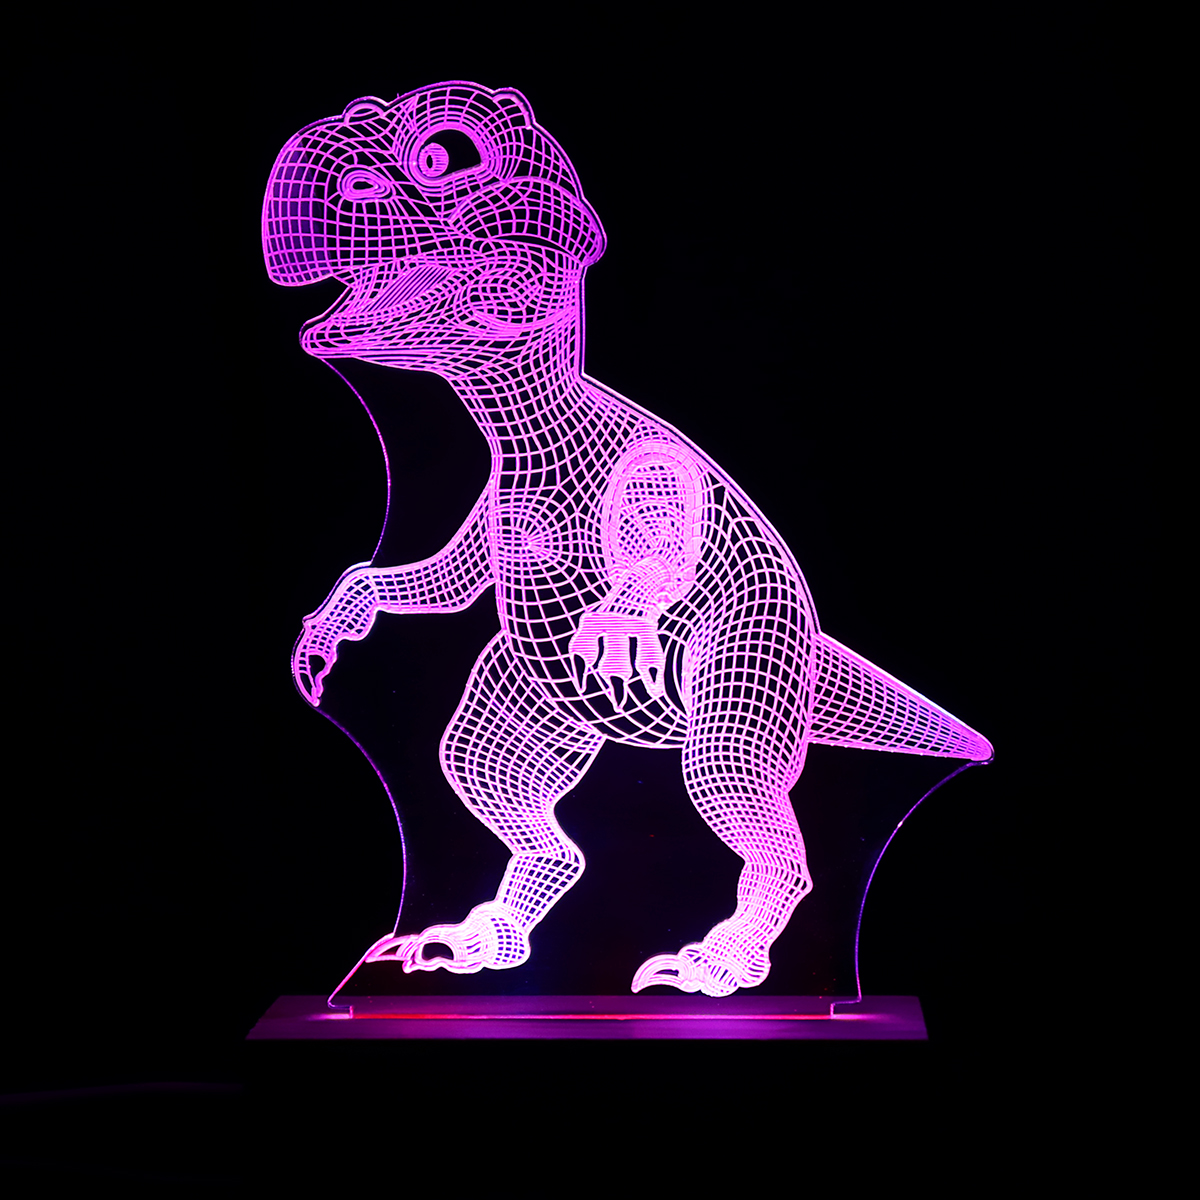 USB-3D-Dinosaur-LED-Desk-Lamp-Three-Colors-Night-Light-for-Bedroom-Home-Gift-Party-Decor-1708776-9